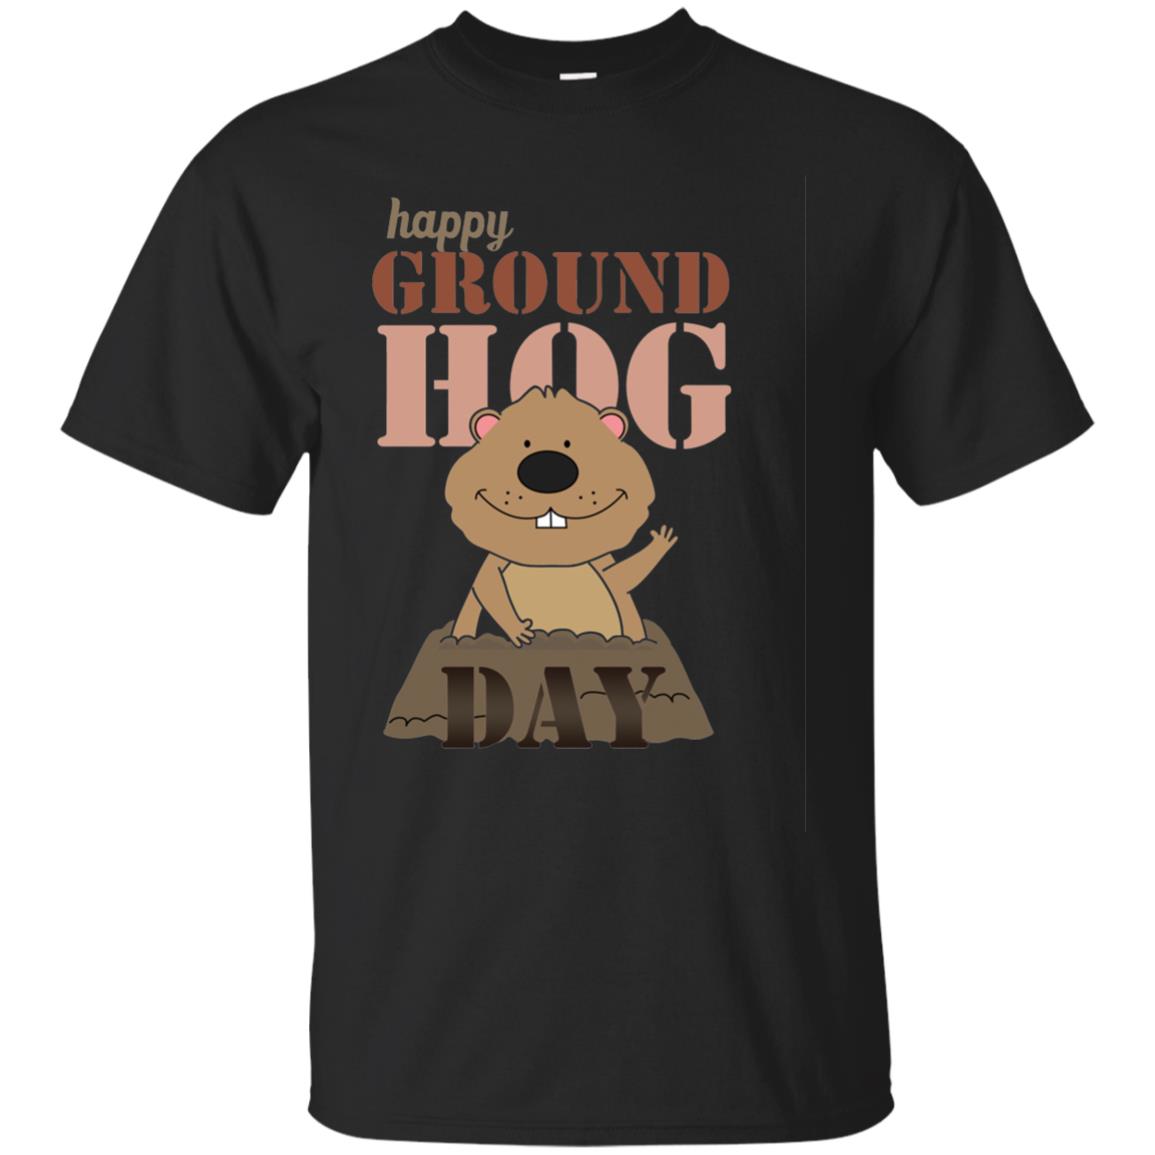 groundhog day shirt - black